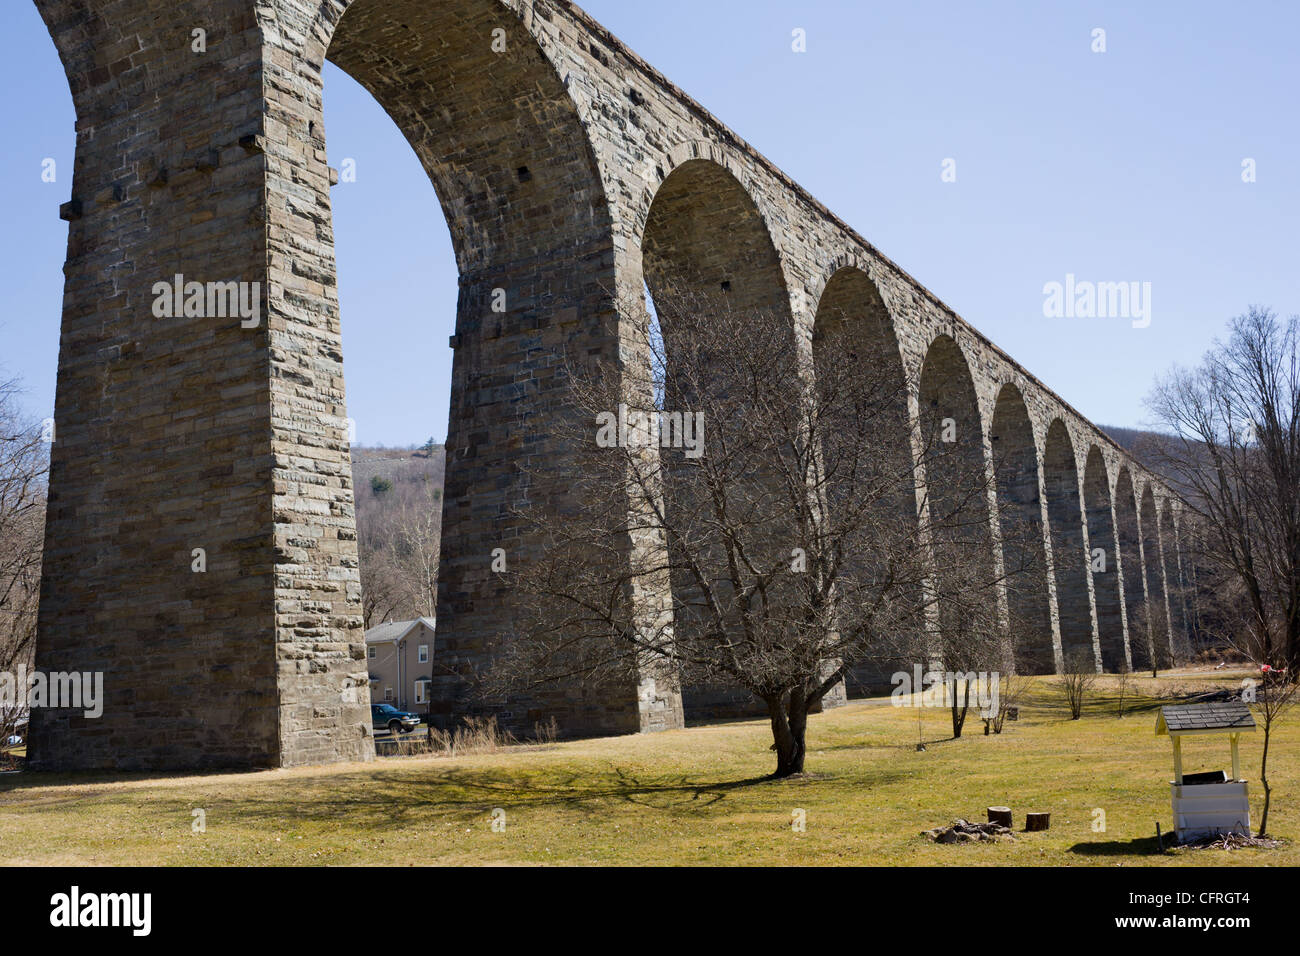 Starrucca Viaduct, 1848 stone arch bridge still in use, northern Pennsylvania Stock Photo